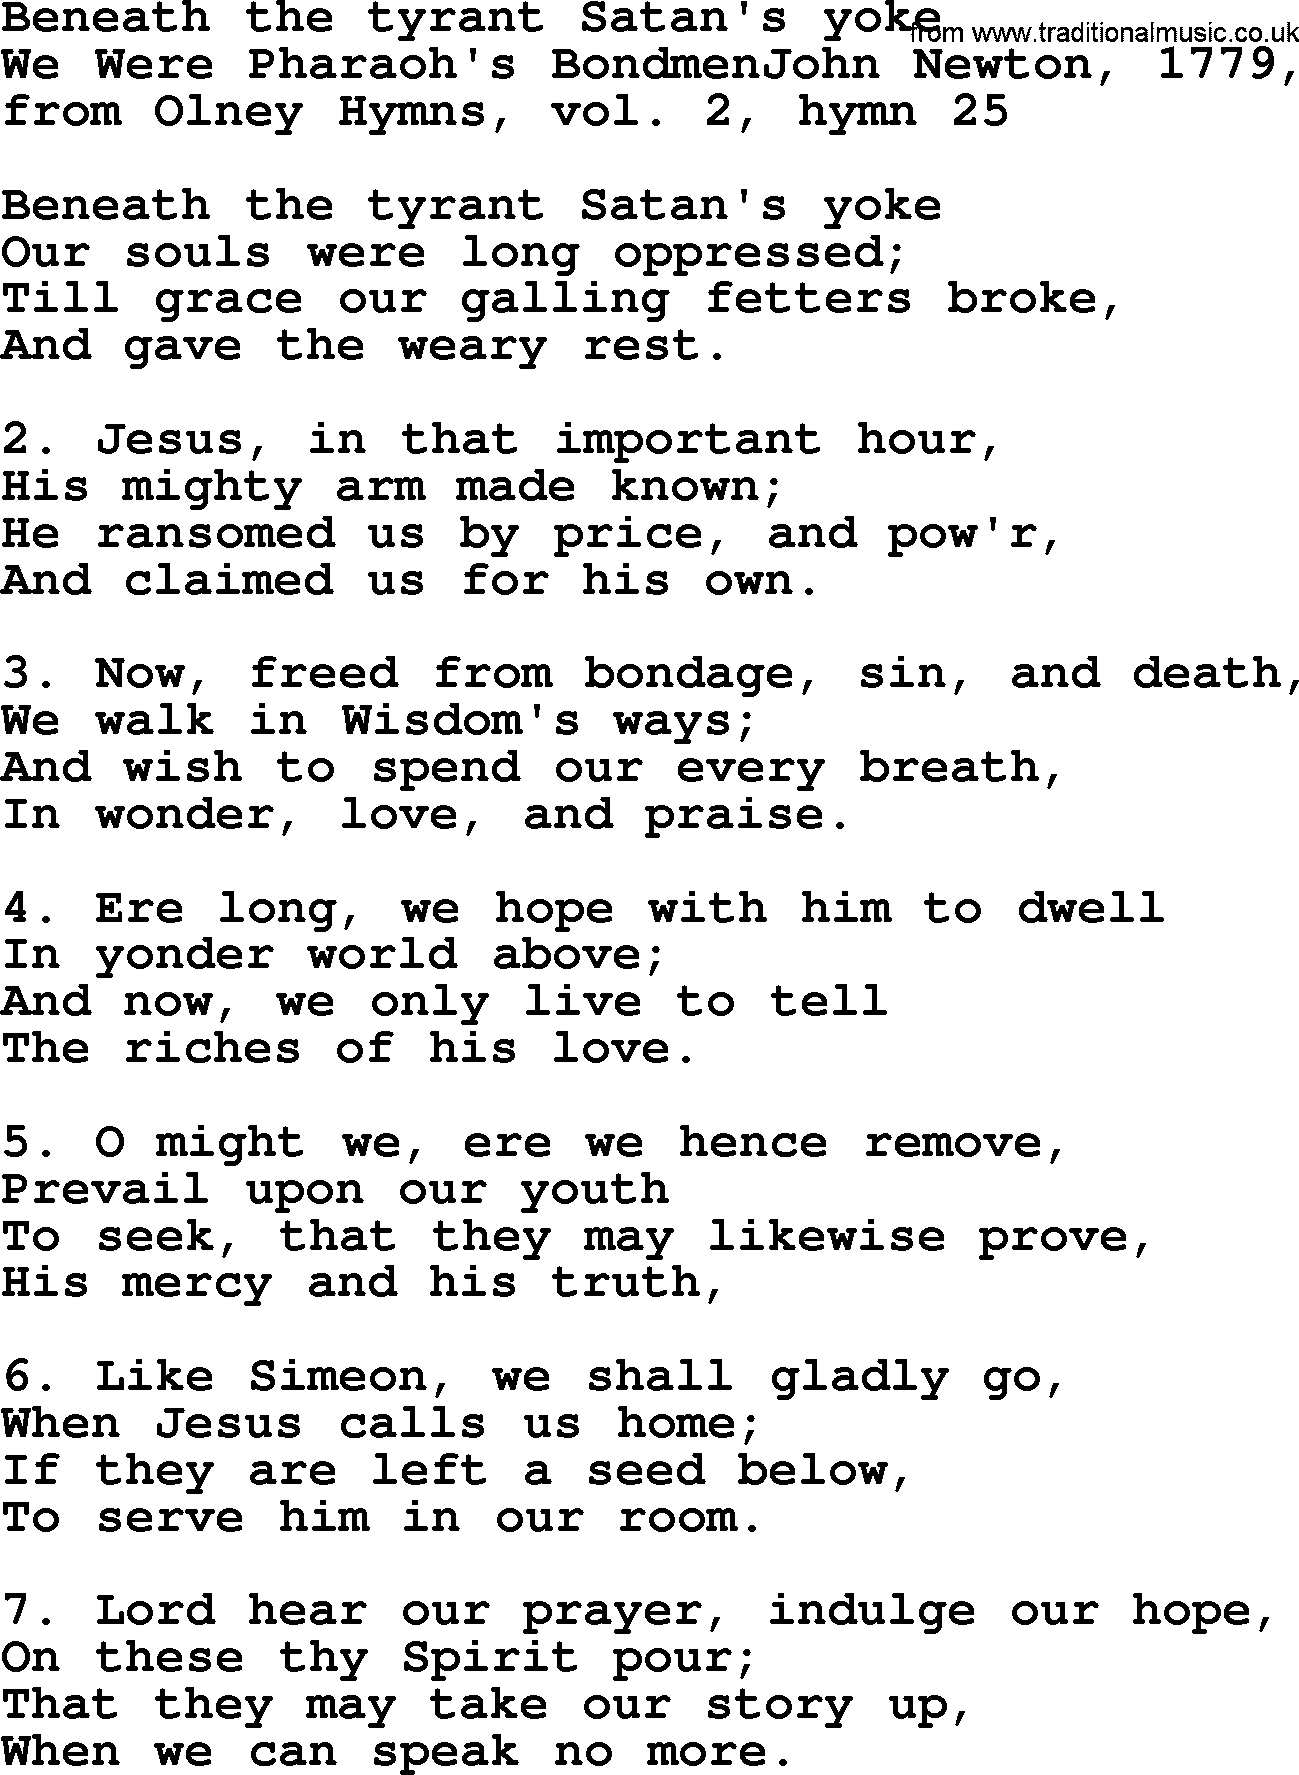 John Newton hymn: Beneath The Tyrant Satan's Yoke, lyrics